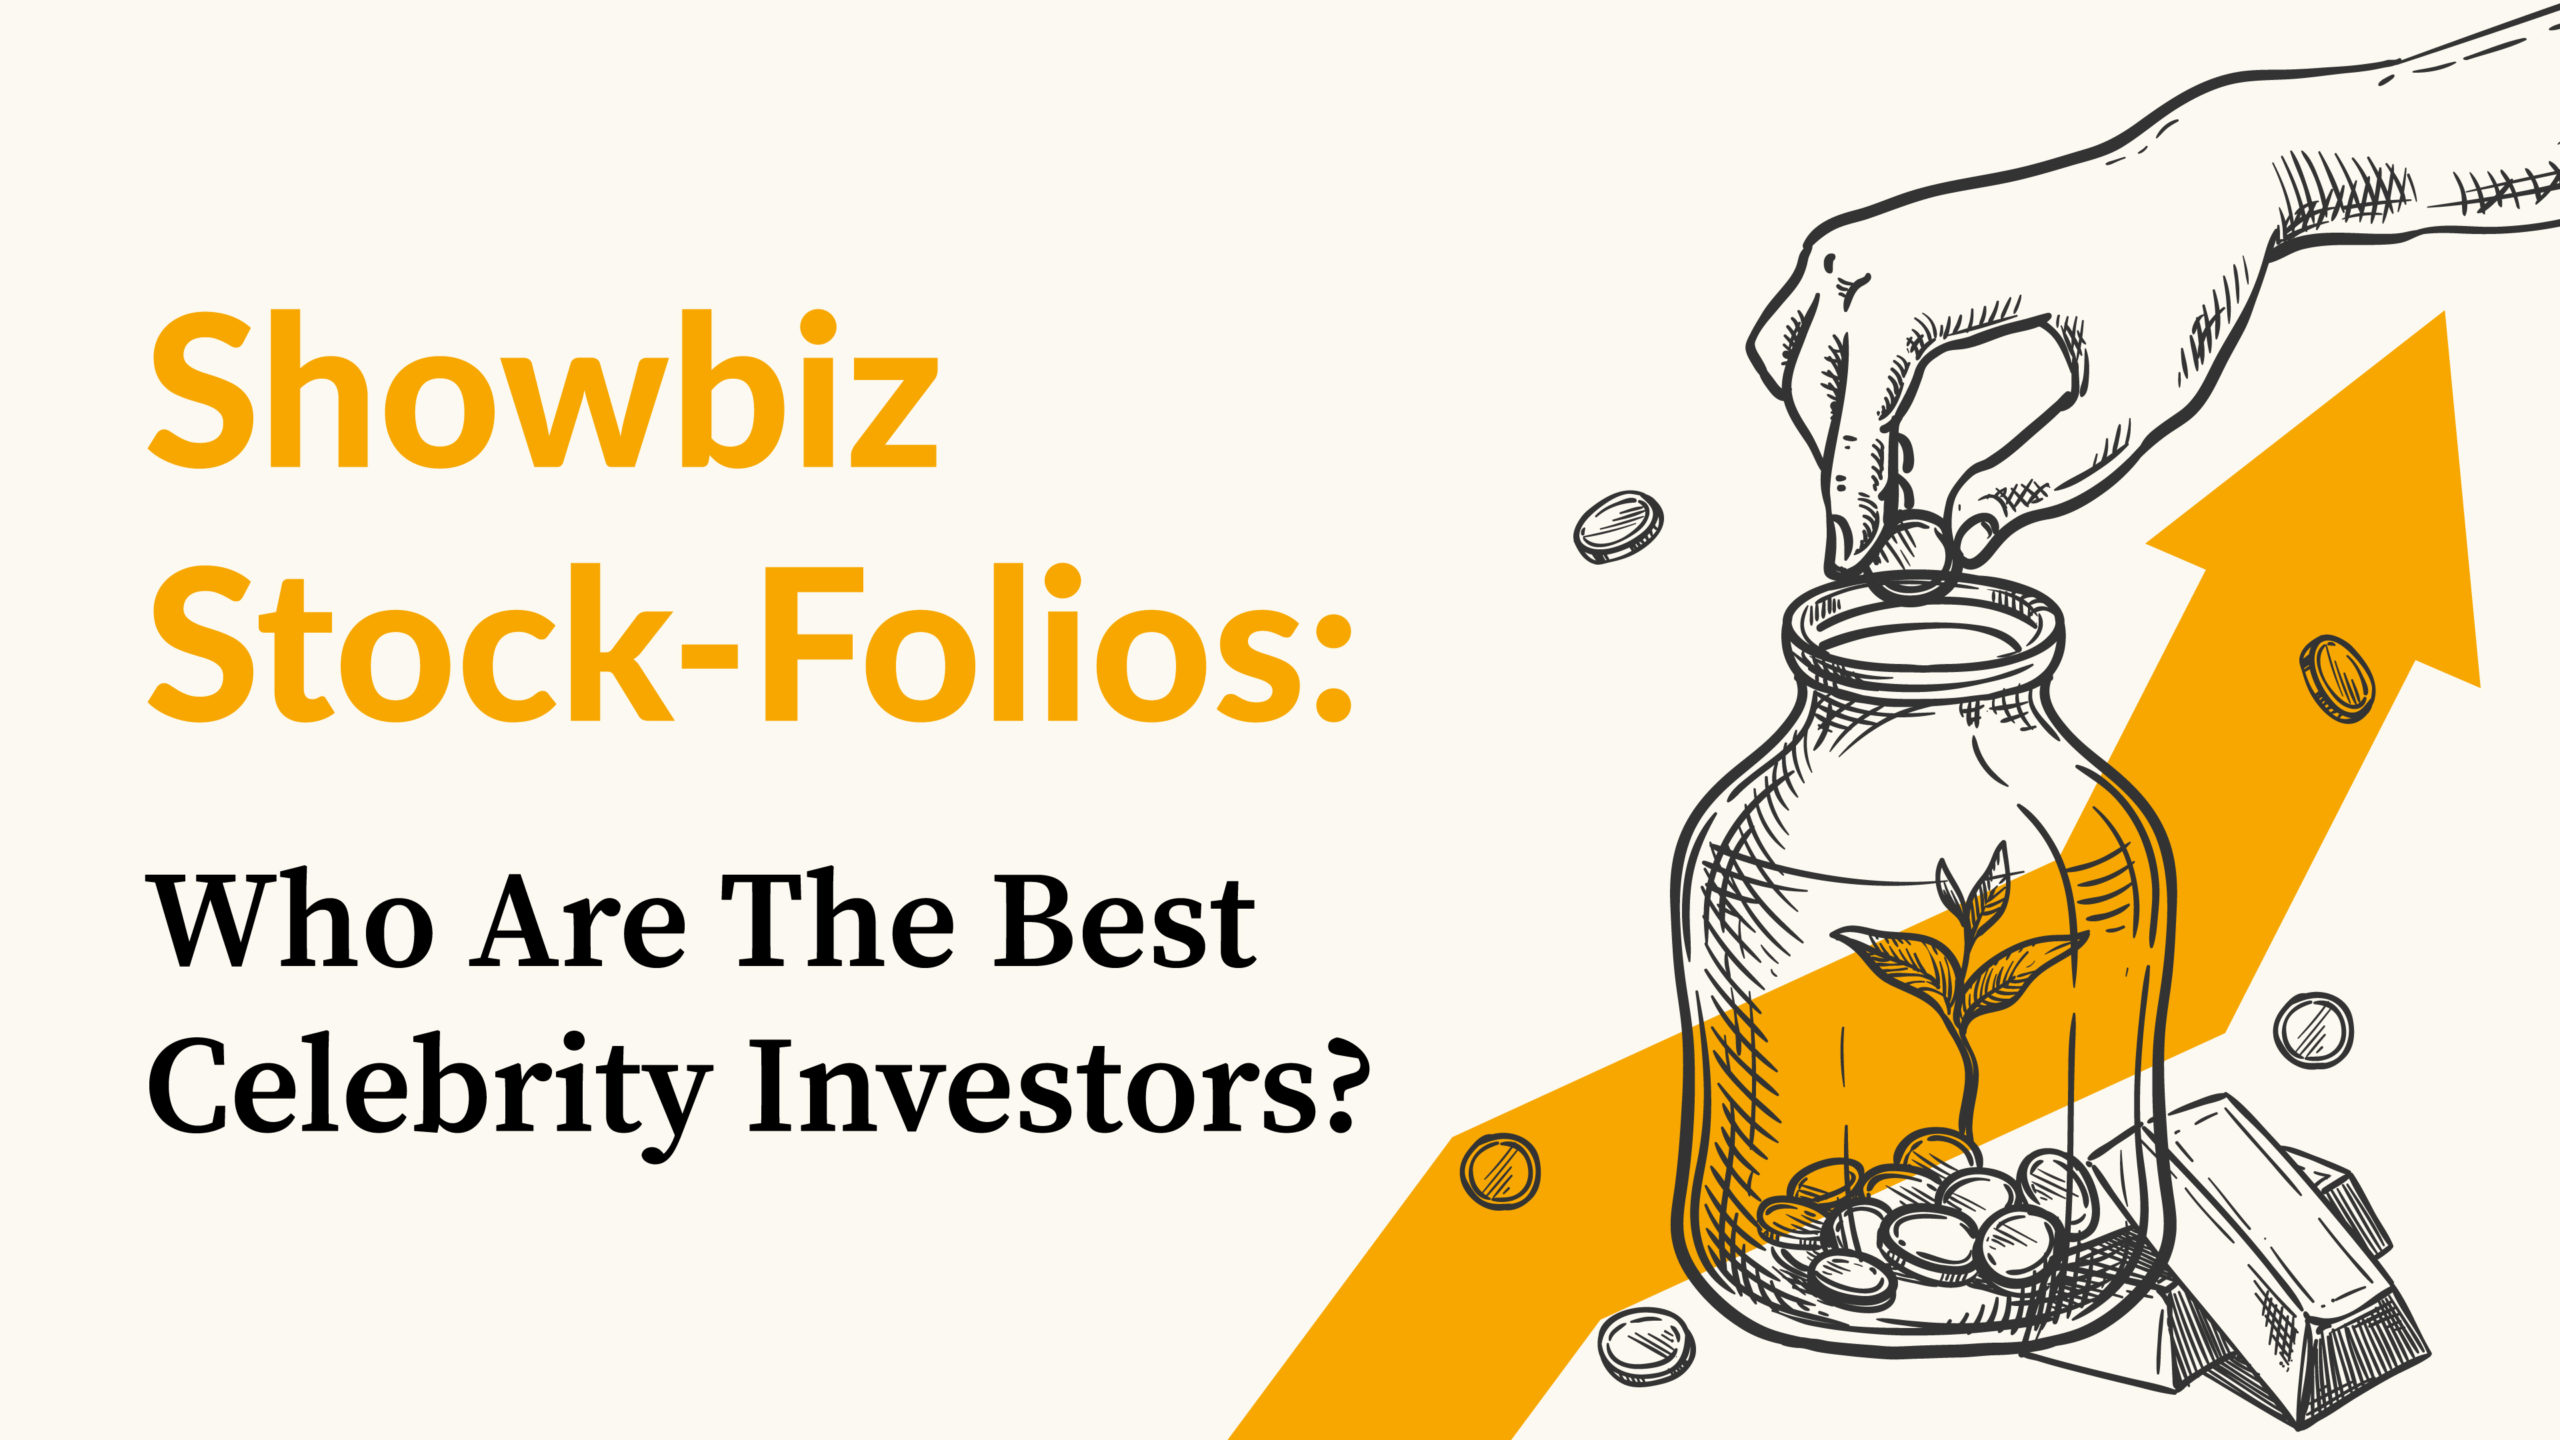 invezz showbiz stock folios 01 social 1 scaled 1 Showbiz stock-folios: Who are the best celebrity investors?